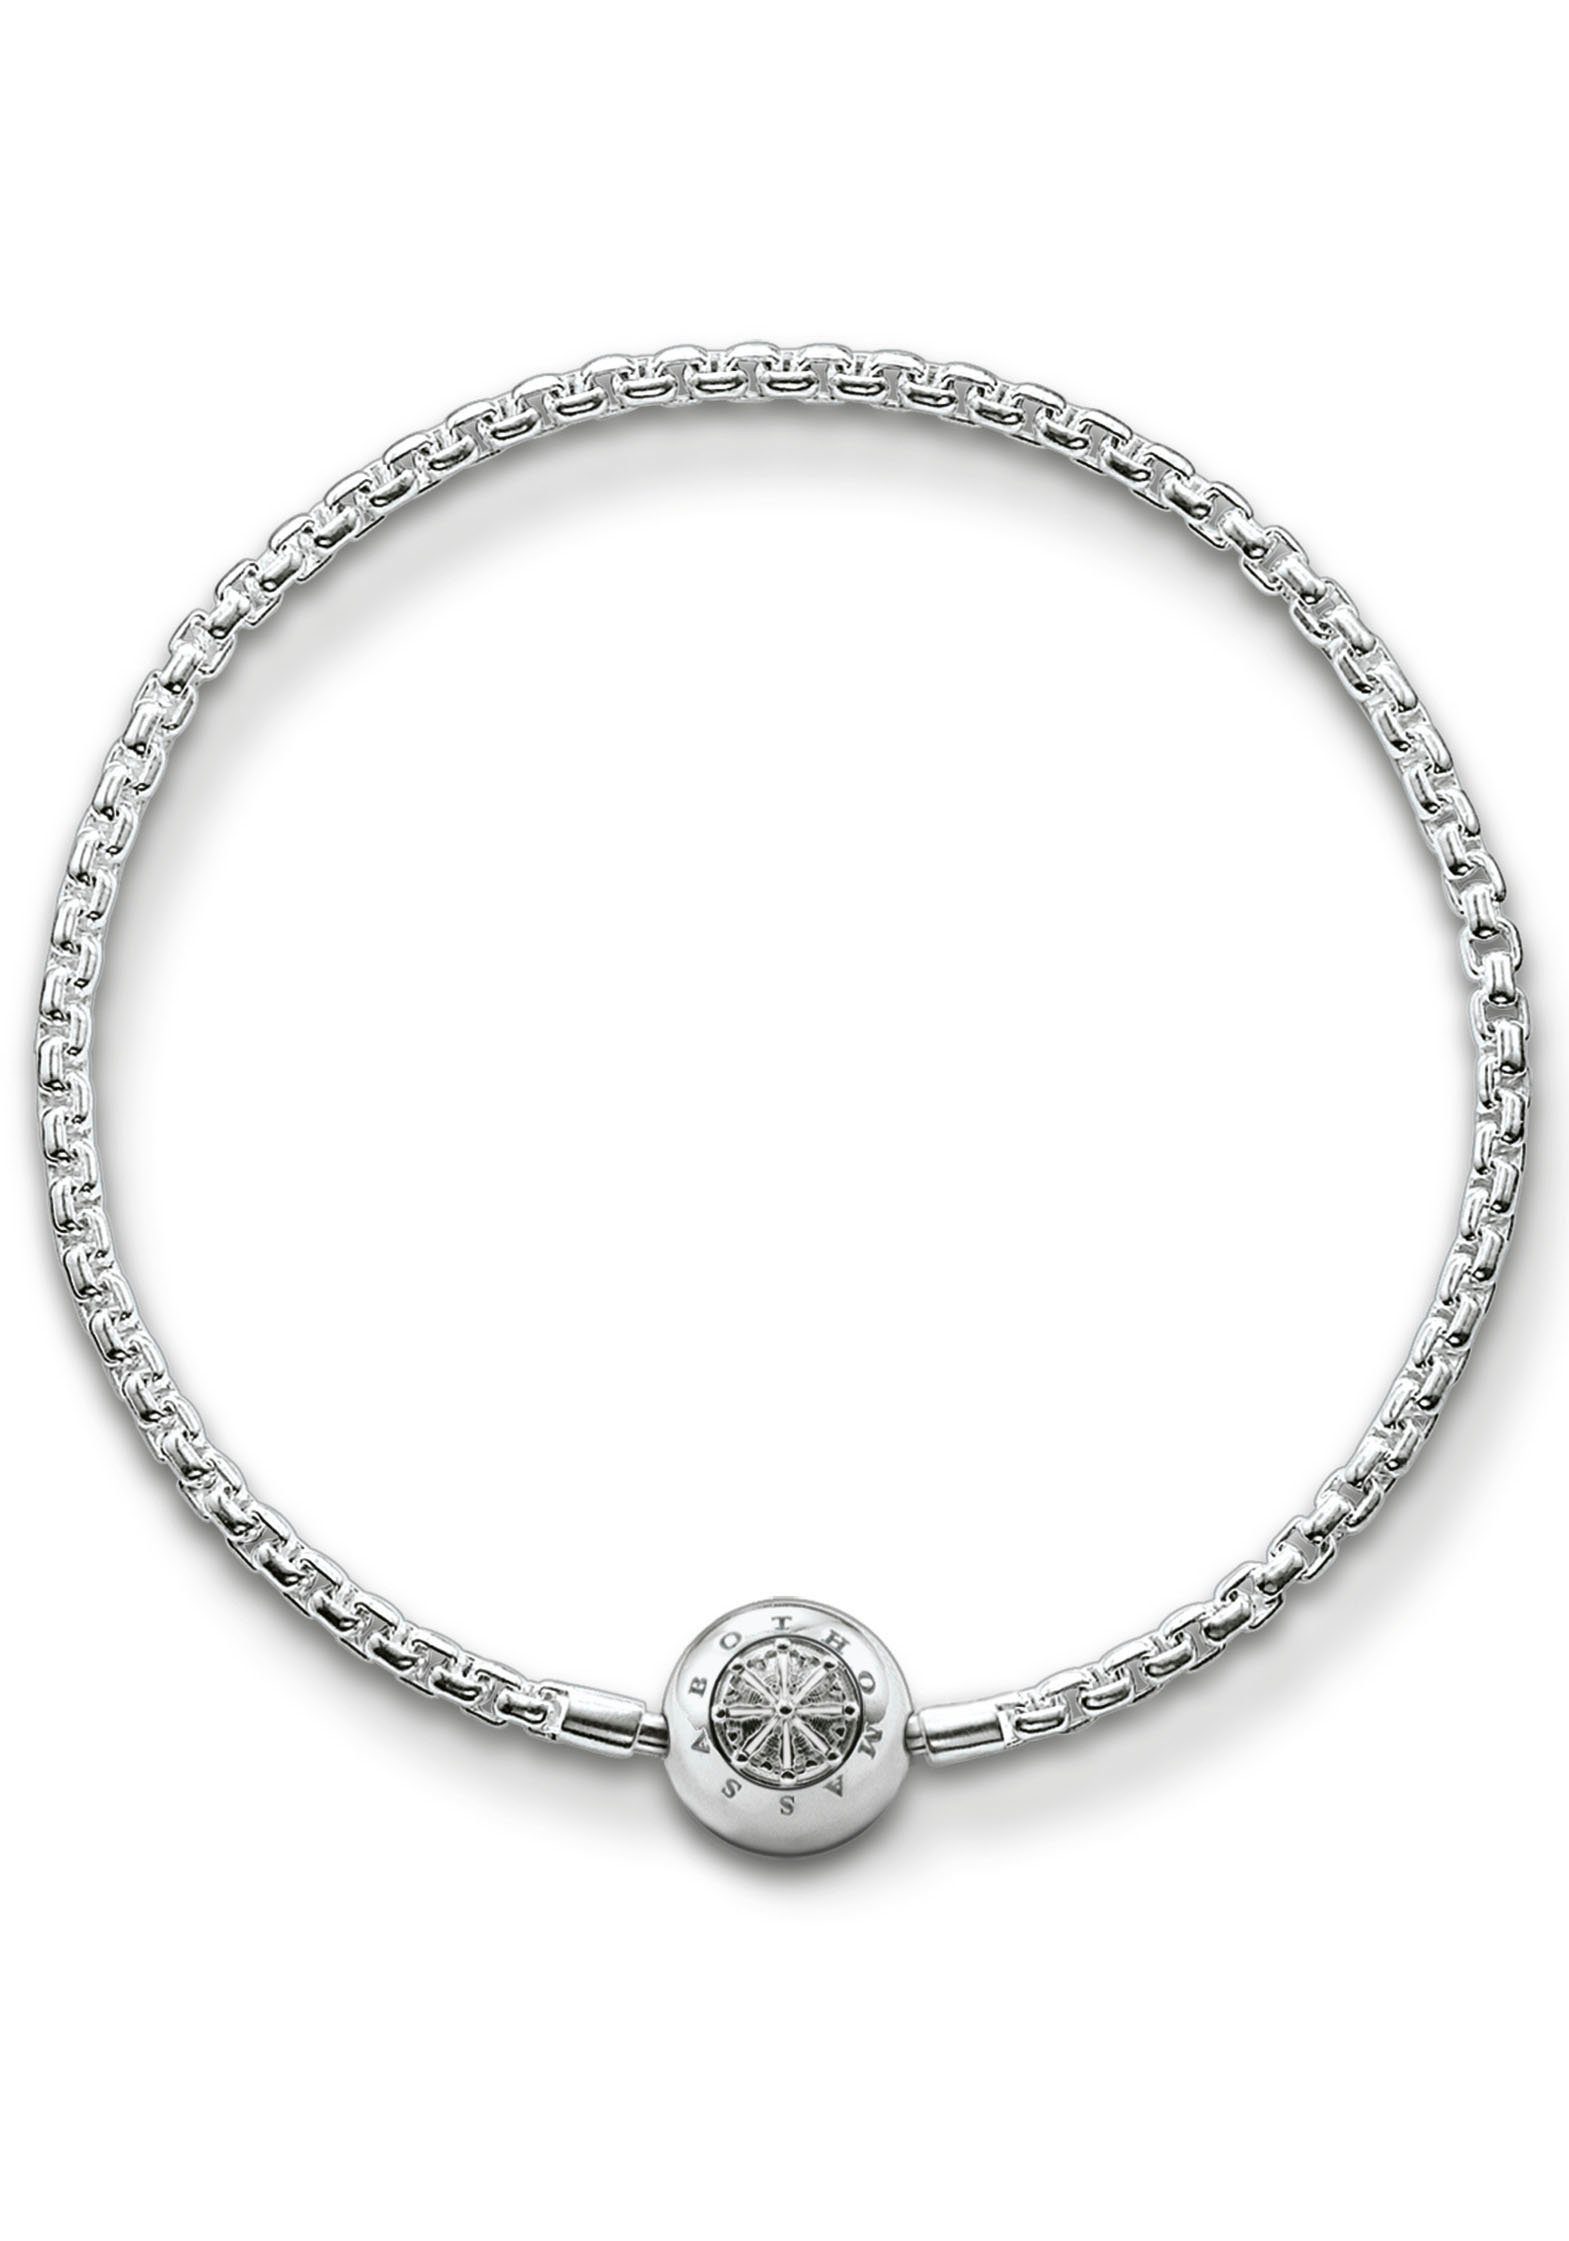 THOMAS SABO Armband für Beads, KA0001-001-12-L17, KA0001-001-12-L19 silber | Silberarmbänder